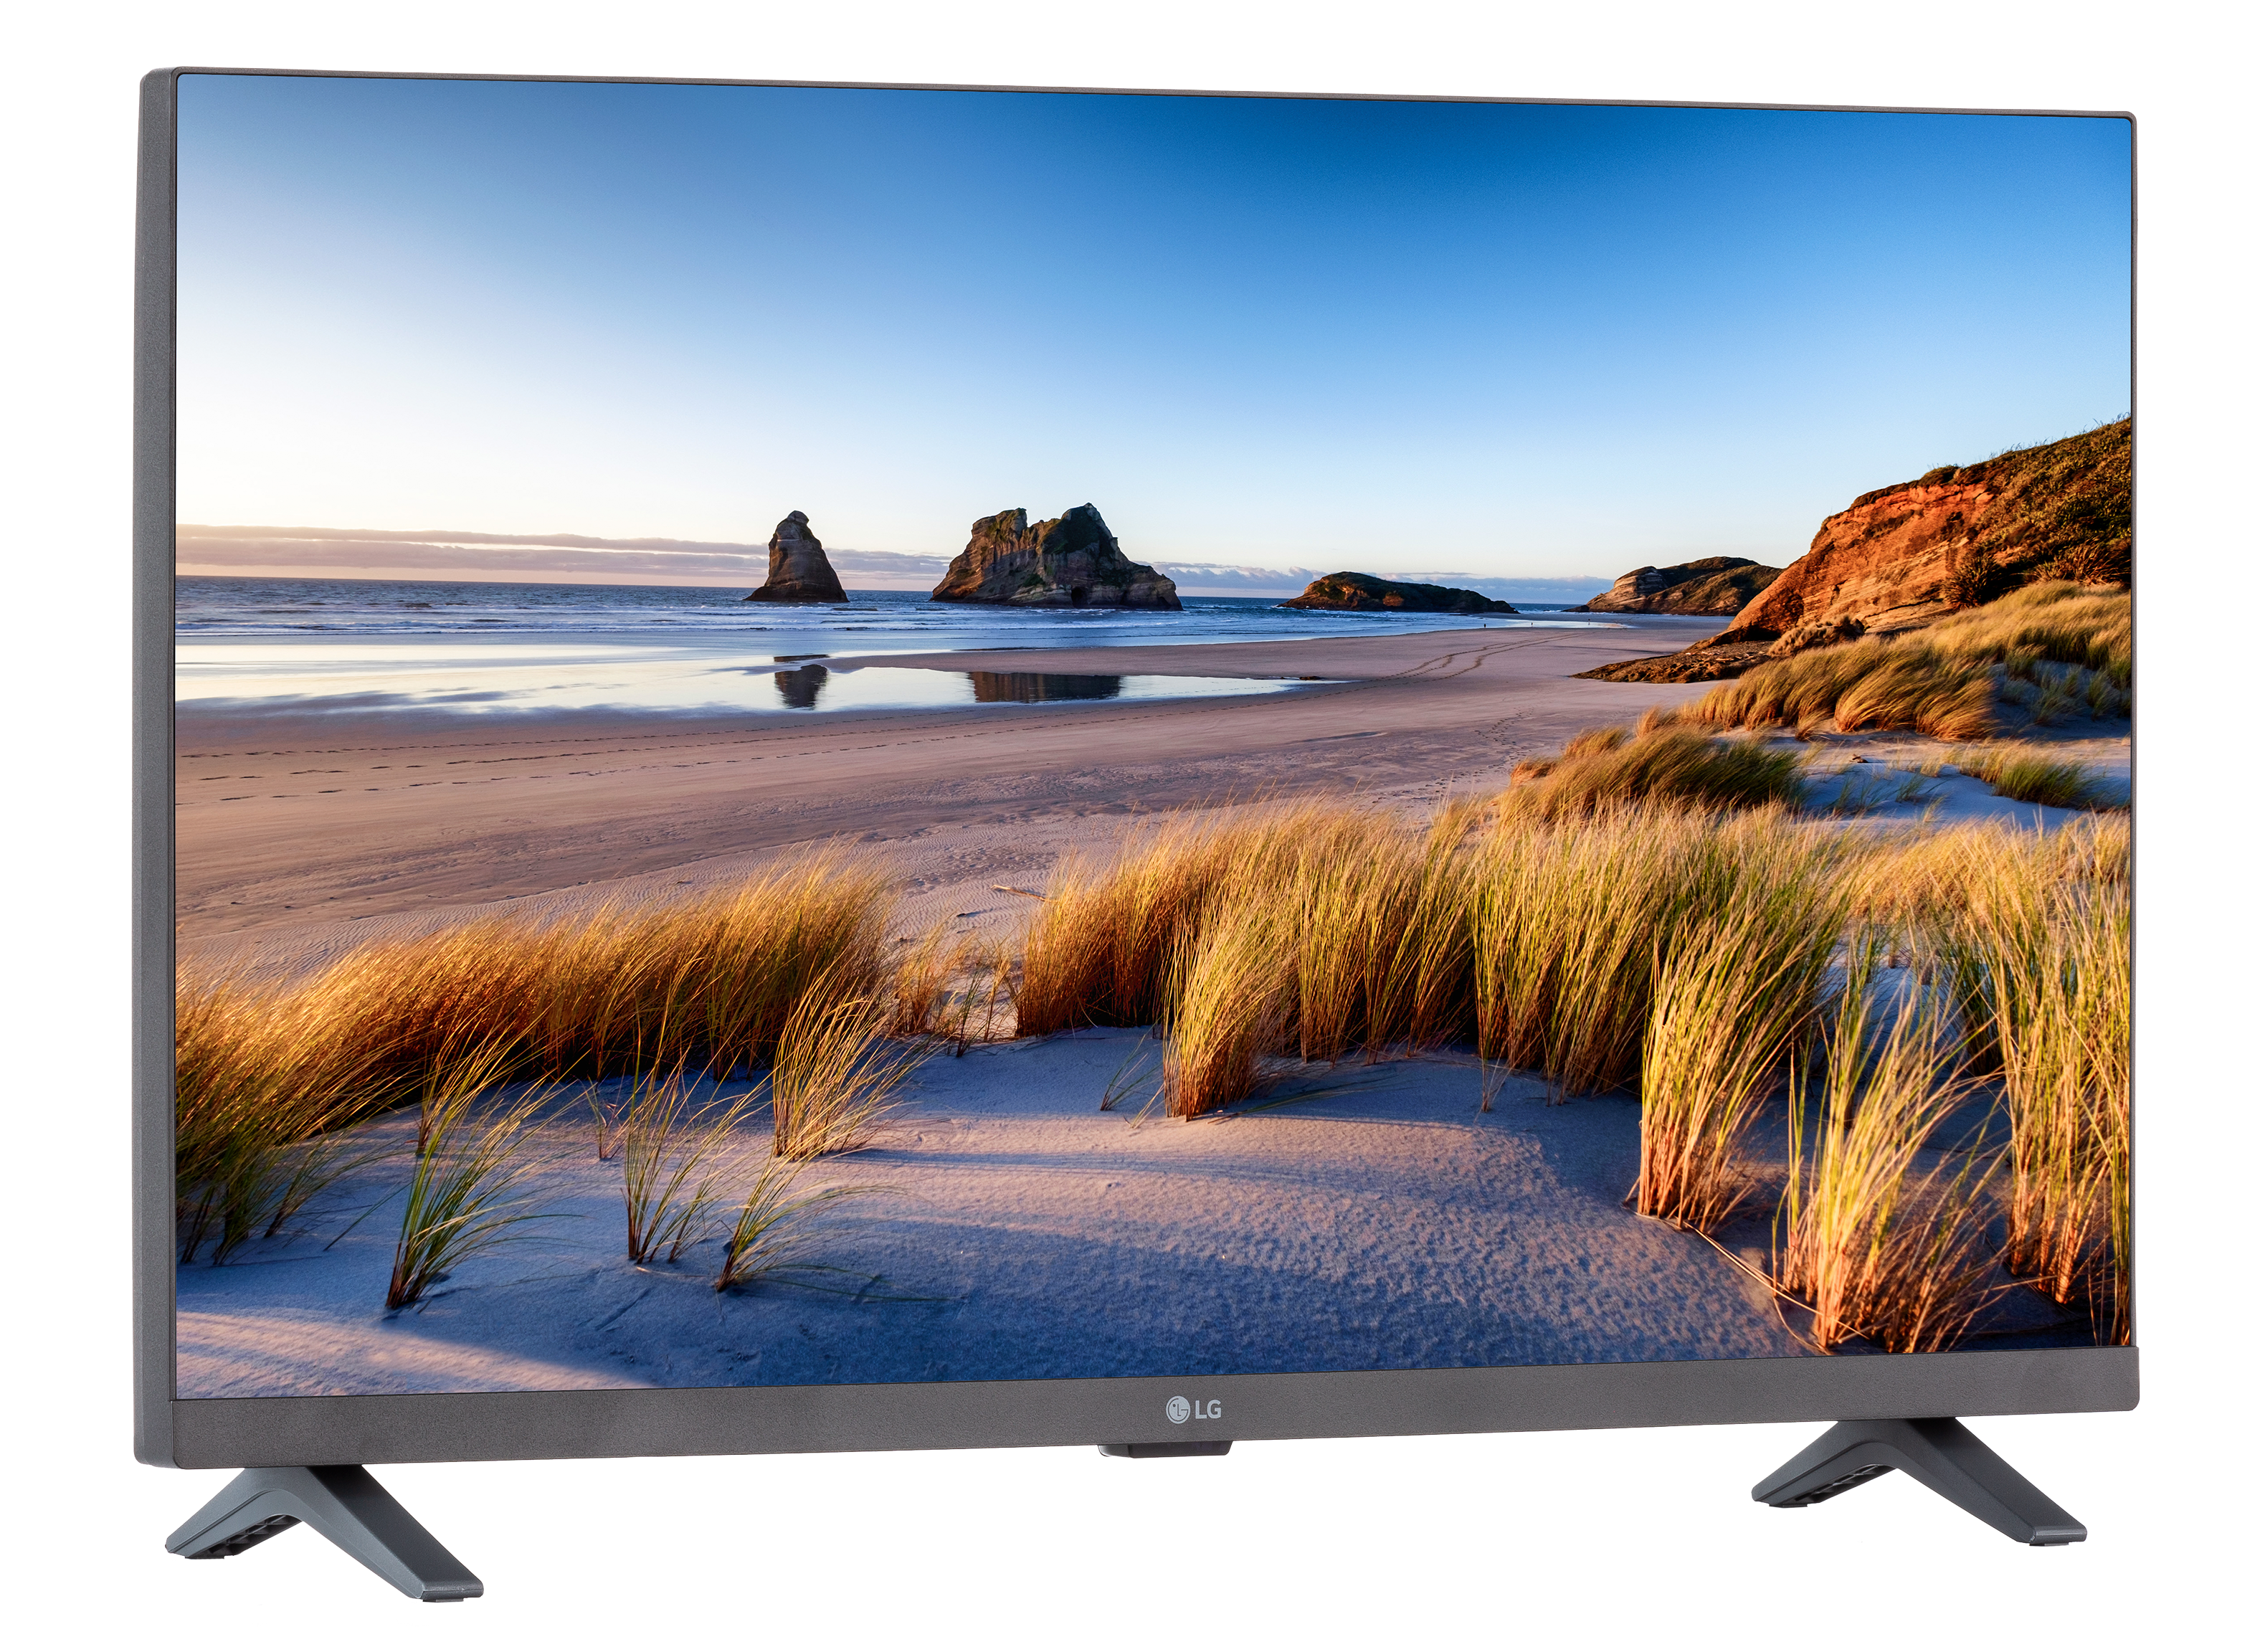 LG 27LP600B-PU TV Review - Consumer Reports